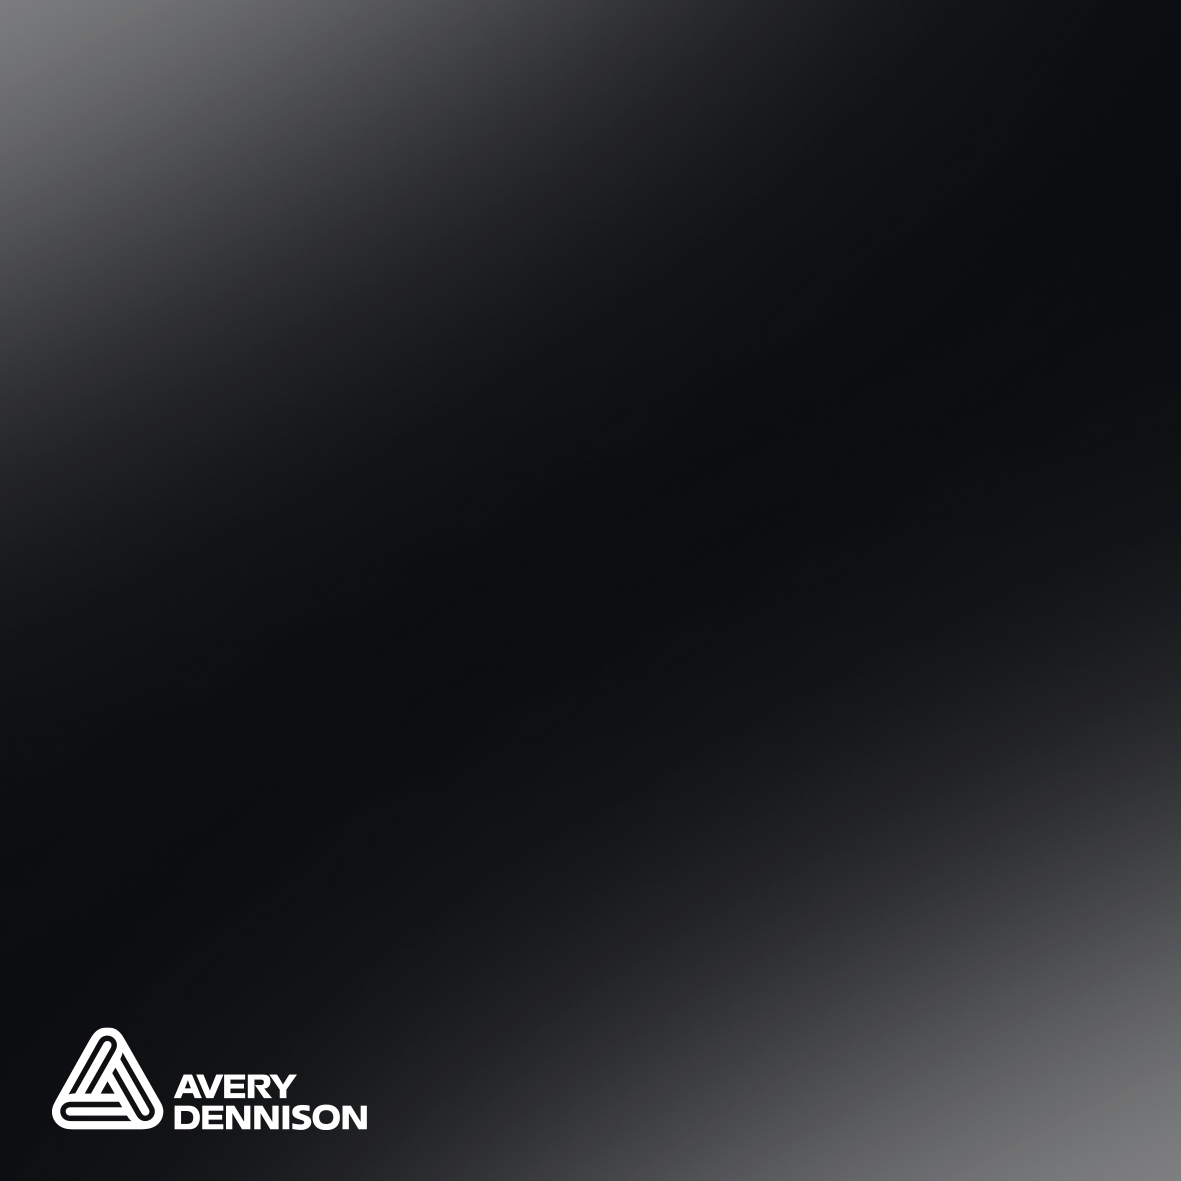 Avery 700-701PF black gloss sort blank polymerisk skærefolie dekorationsfolie carl jensen